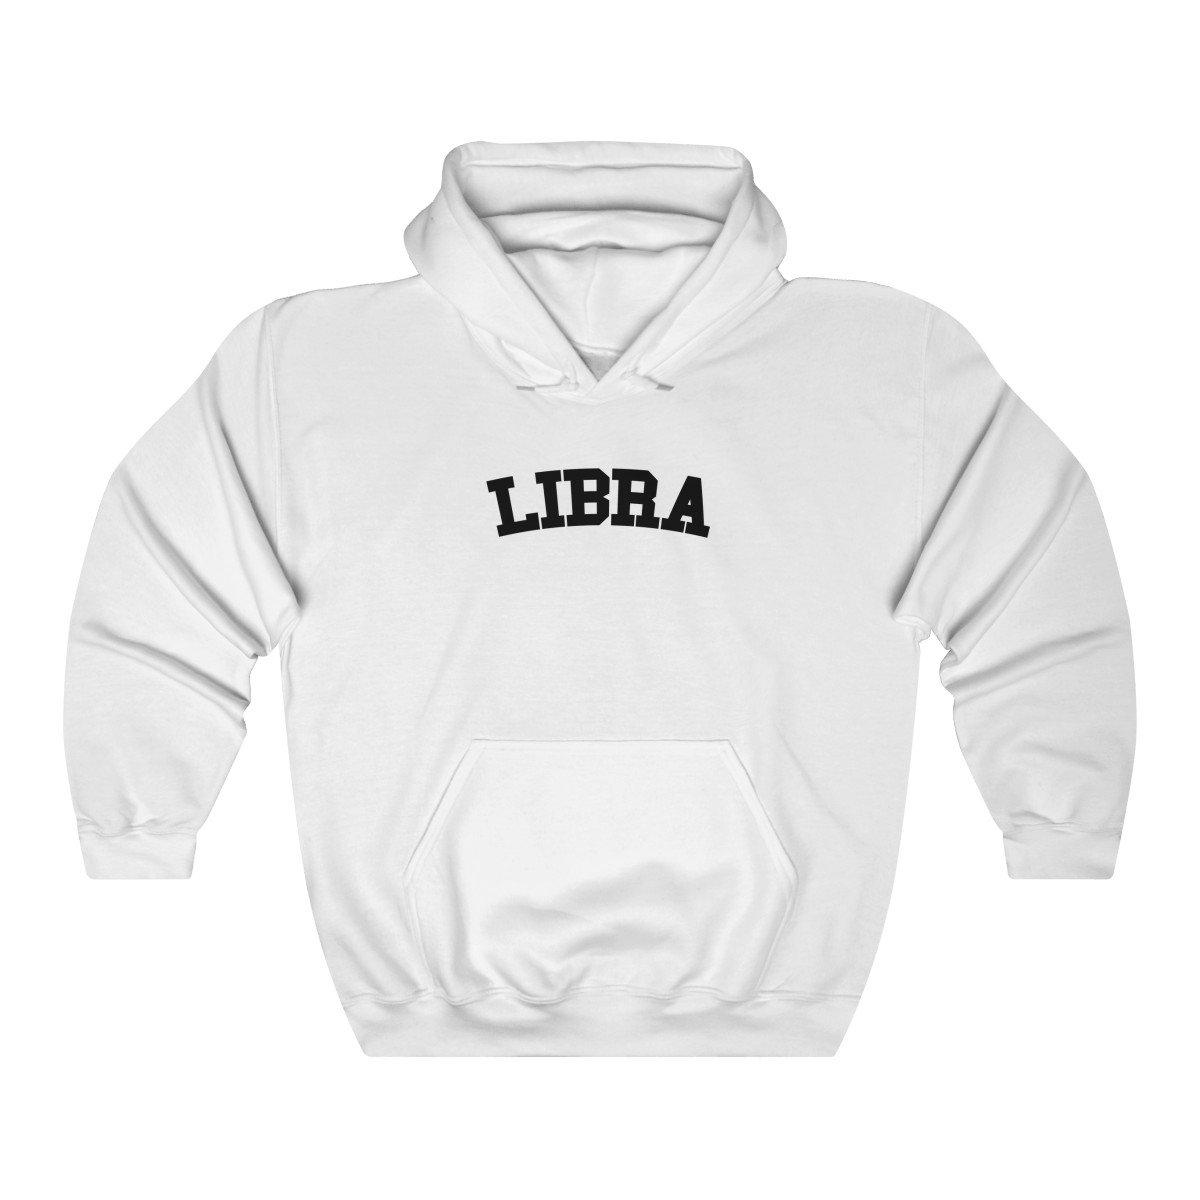 Libra Collegiate Hoodie